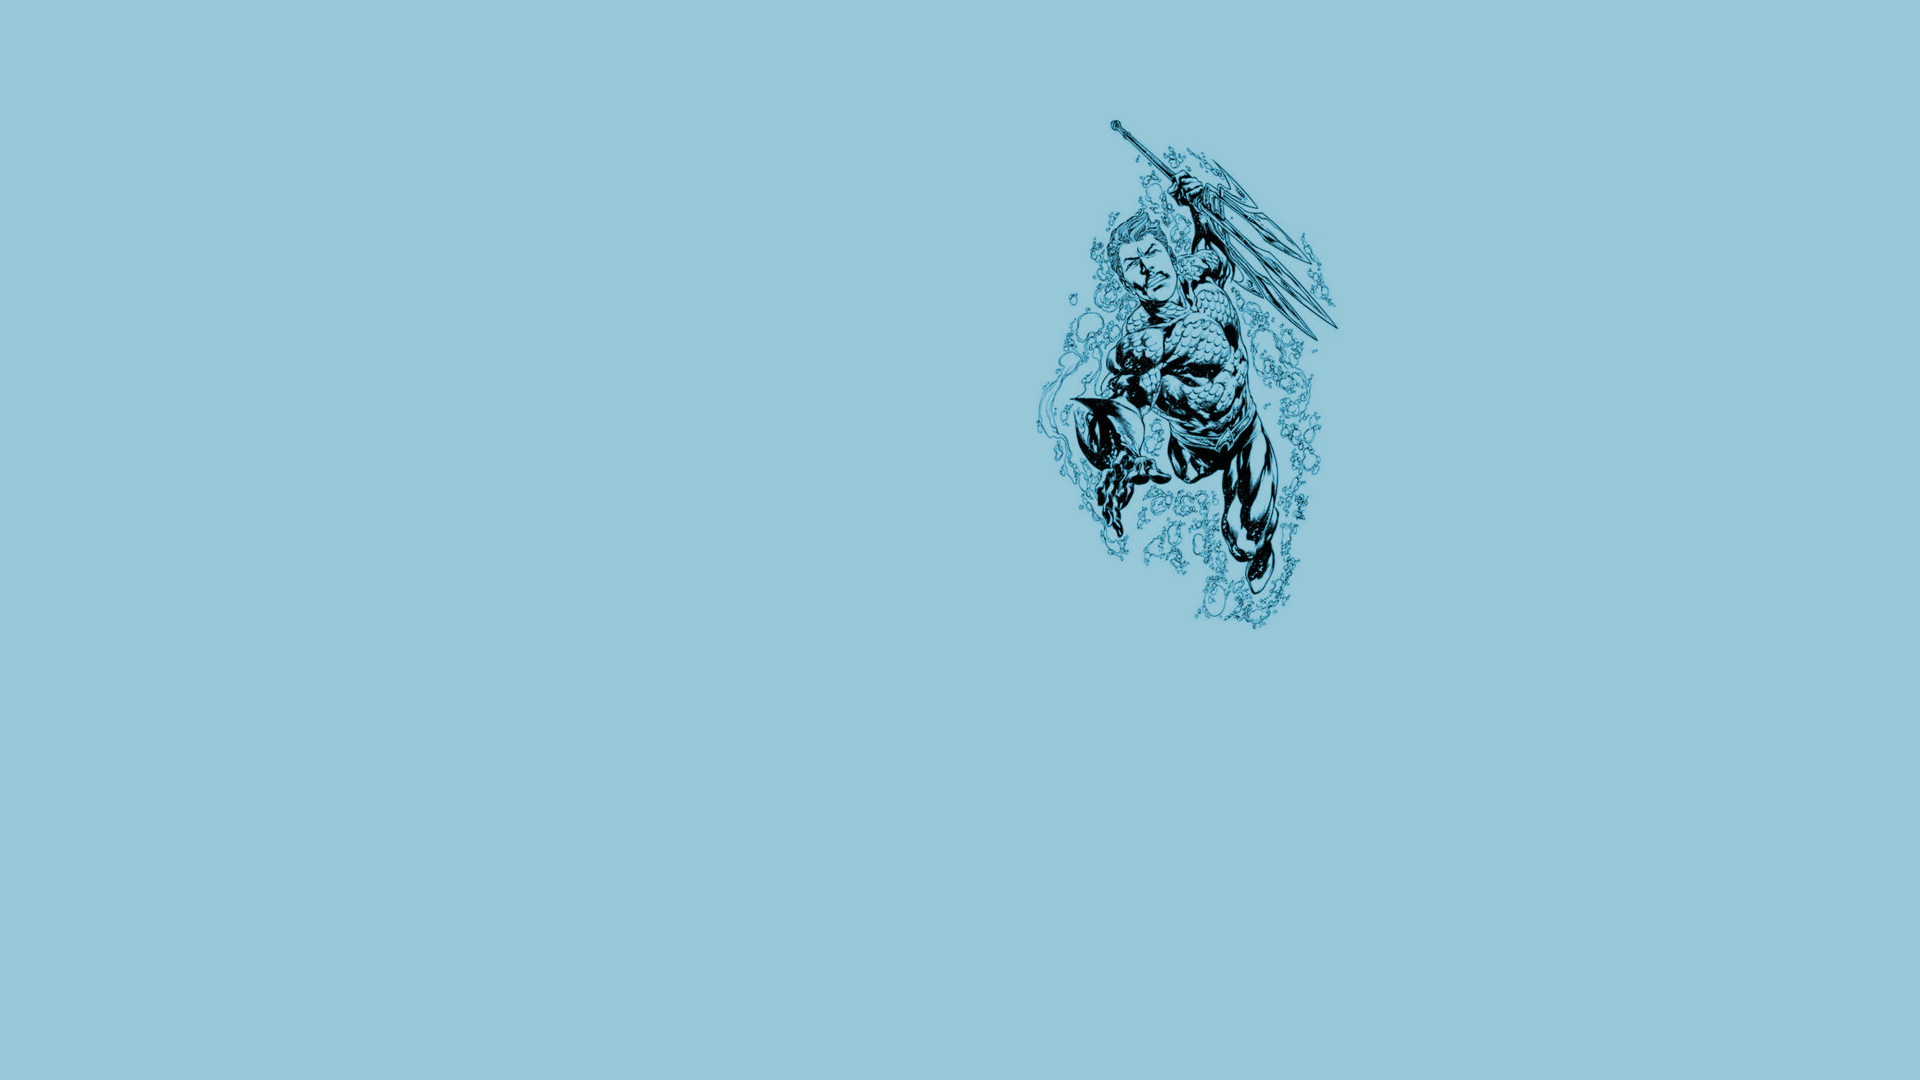 Aquaman Computer Wallpapers, Desktop Backgrounds 1920x1080 ID